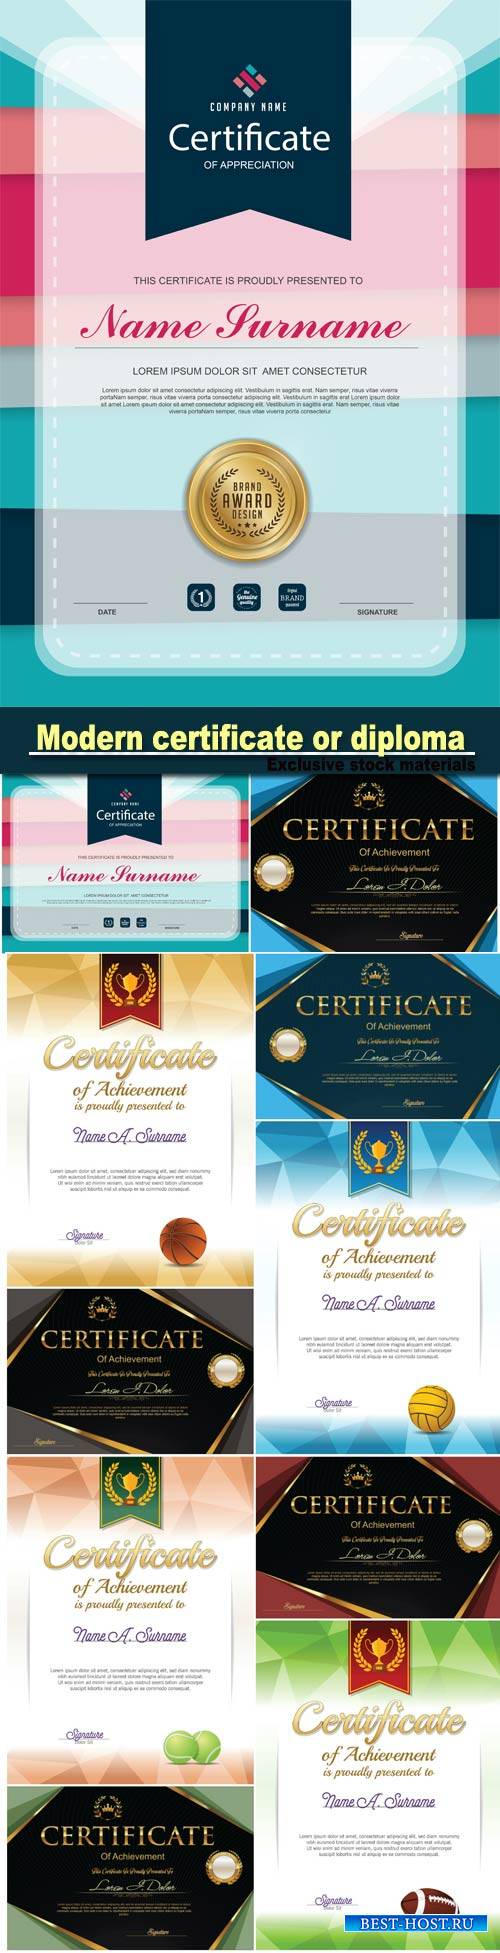 Modern certificate or diploma template